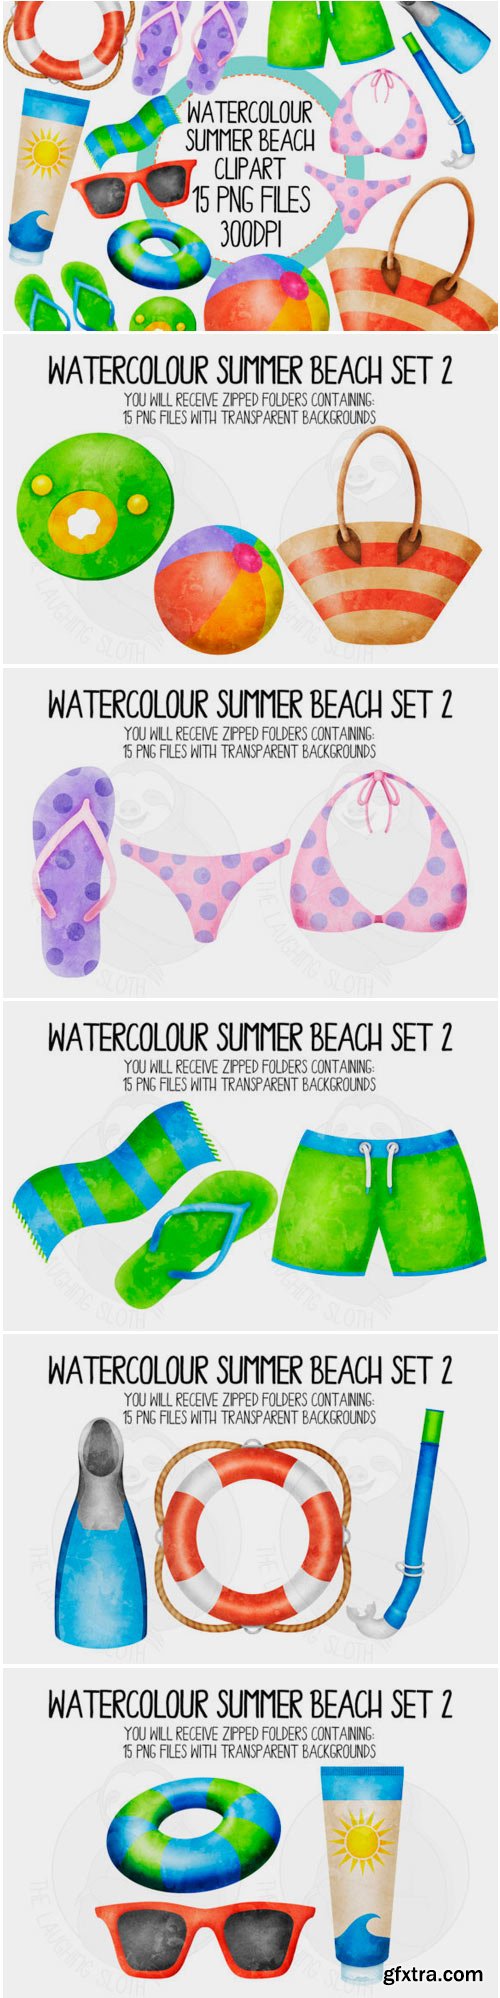 Watercolour Summer Beach Set 2 1575861